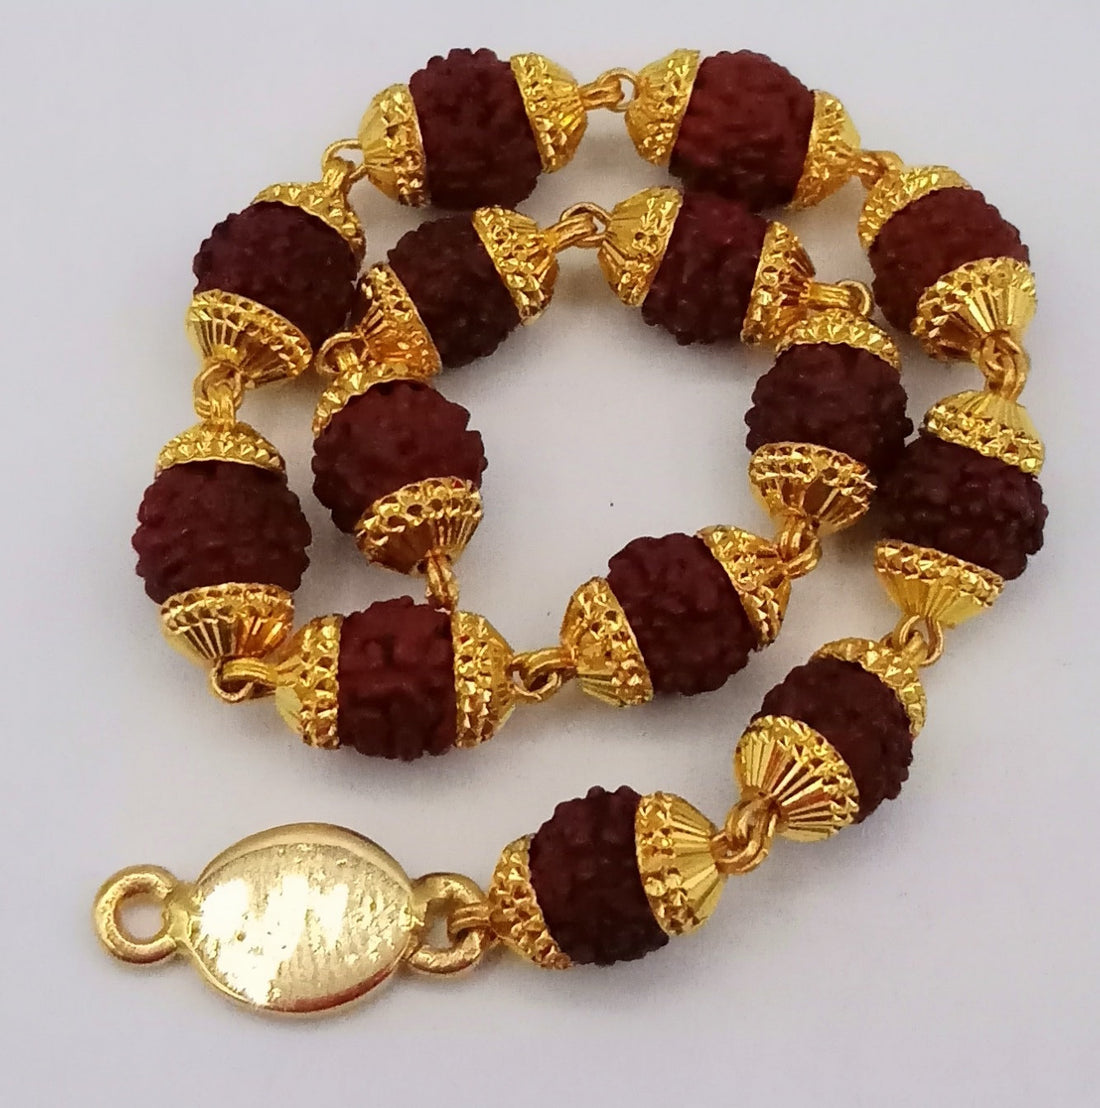 22 karat yellow gold with natural rudraksha beads handmade bracelet fabulous vintage designer 7.5",8", 8.5" 9" gifting jewelry - TRIBAL ORNAMENTS